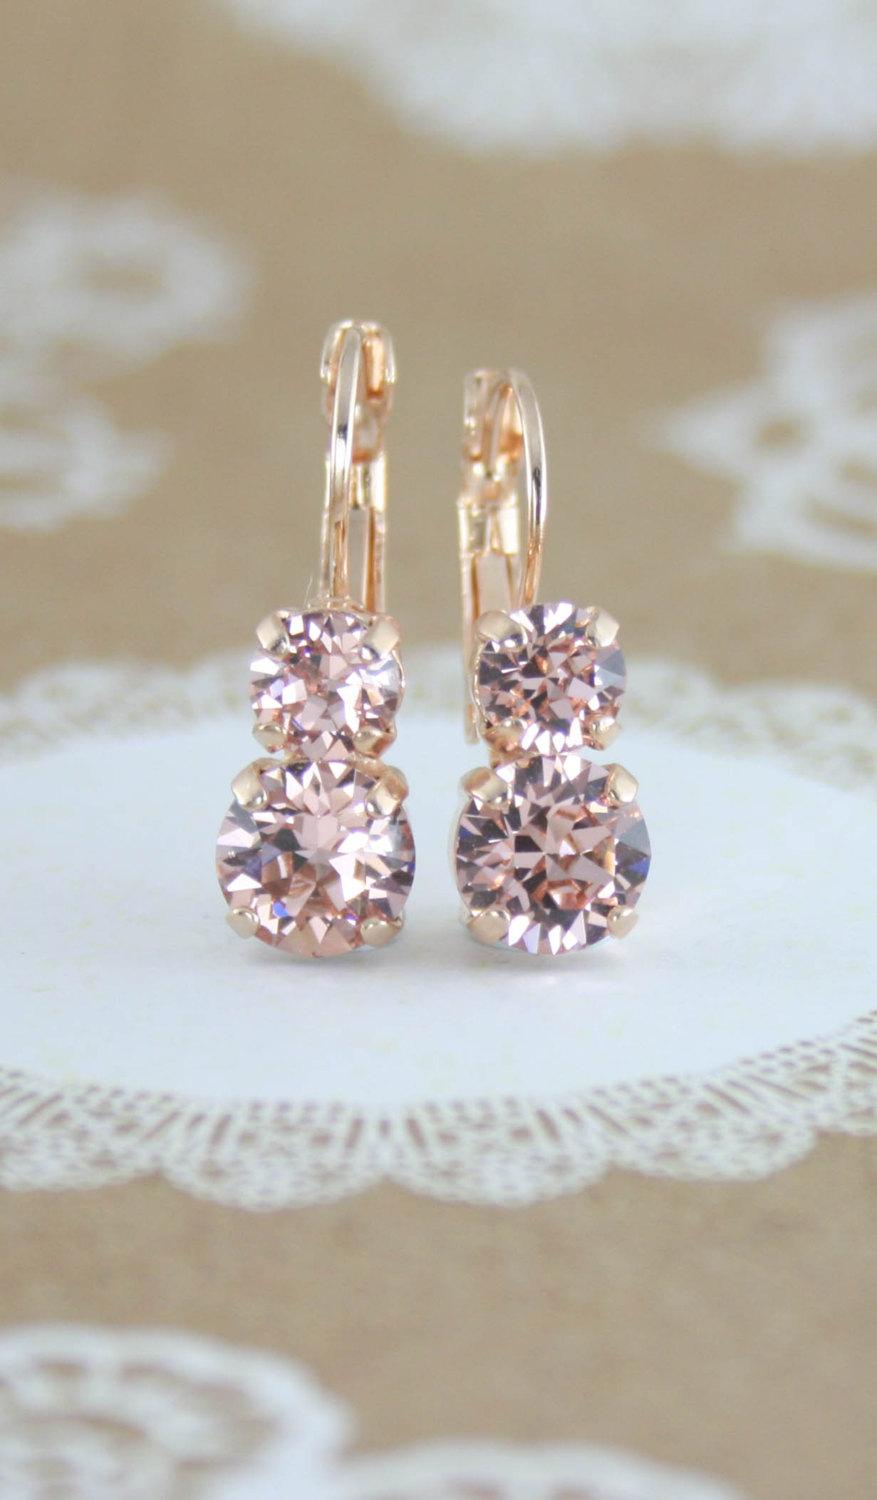 Mariage - Blush earrings,blush crystal earrings,blush bridesmaid earrings,swarovski blush,rose gold earrings,rose gold blush earrings,blush wedding